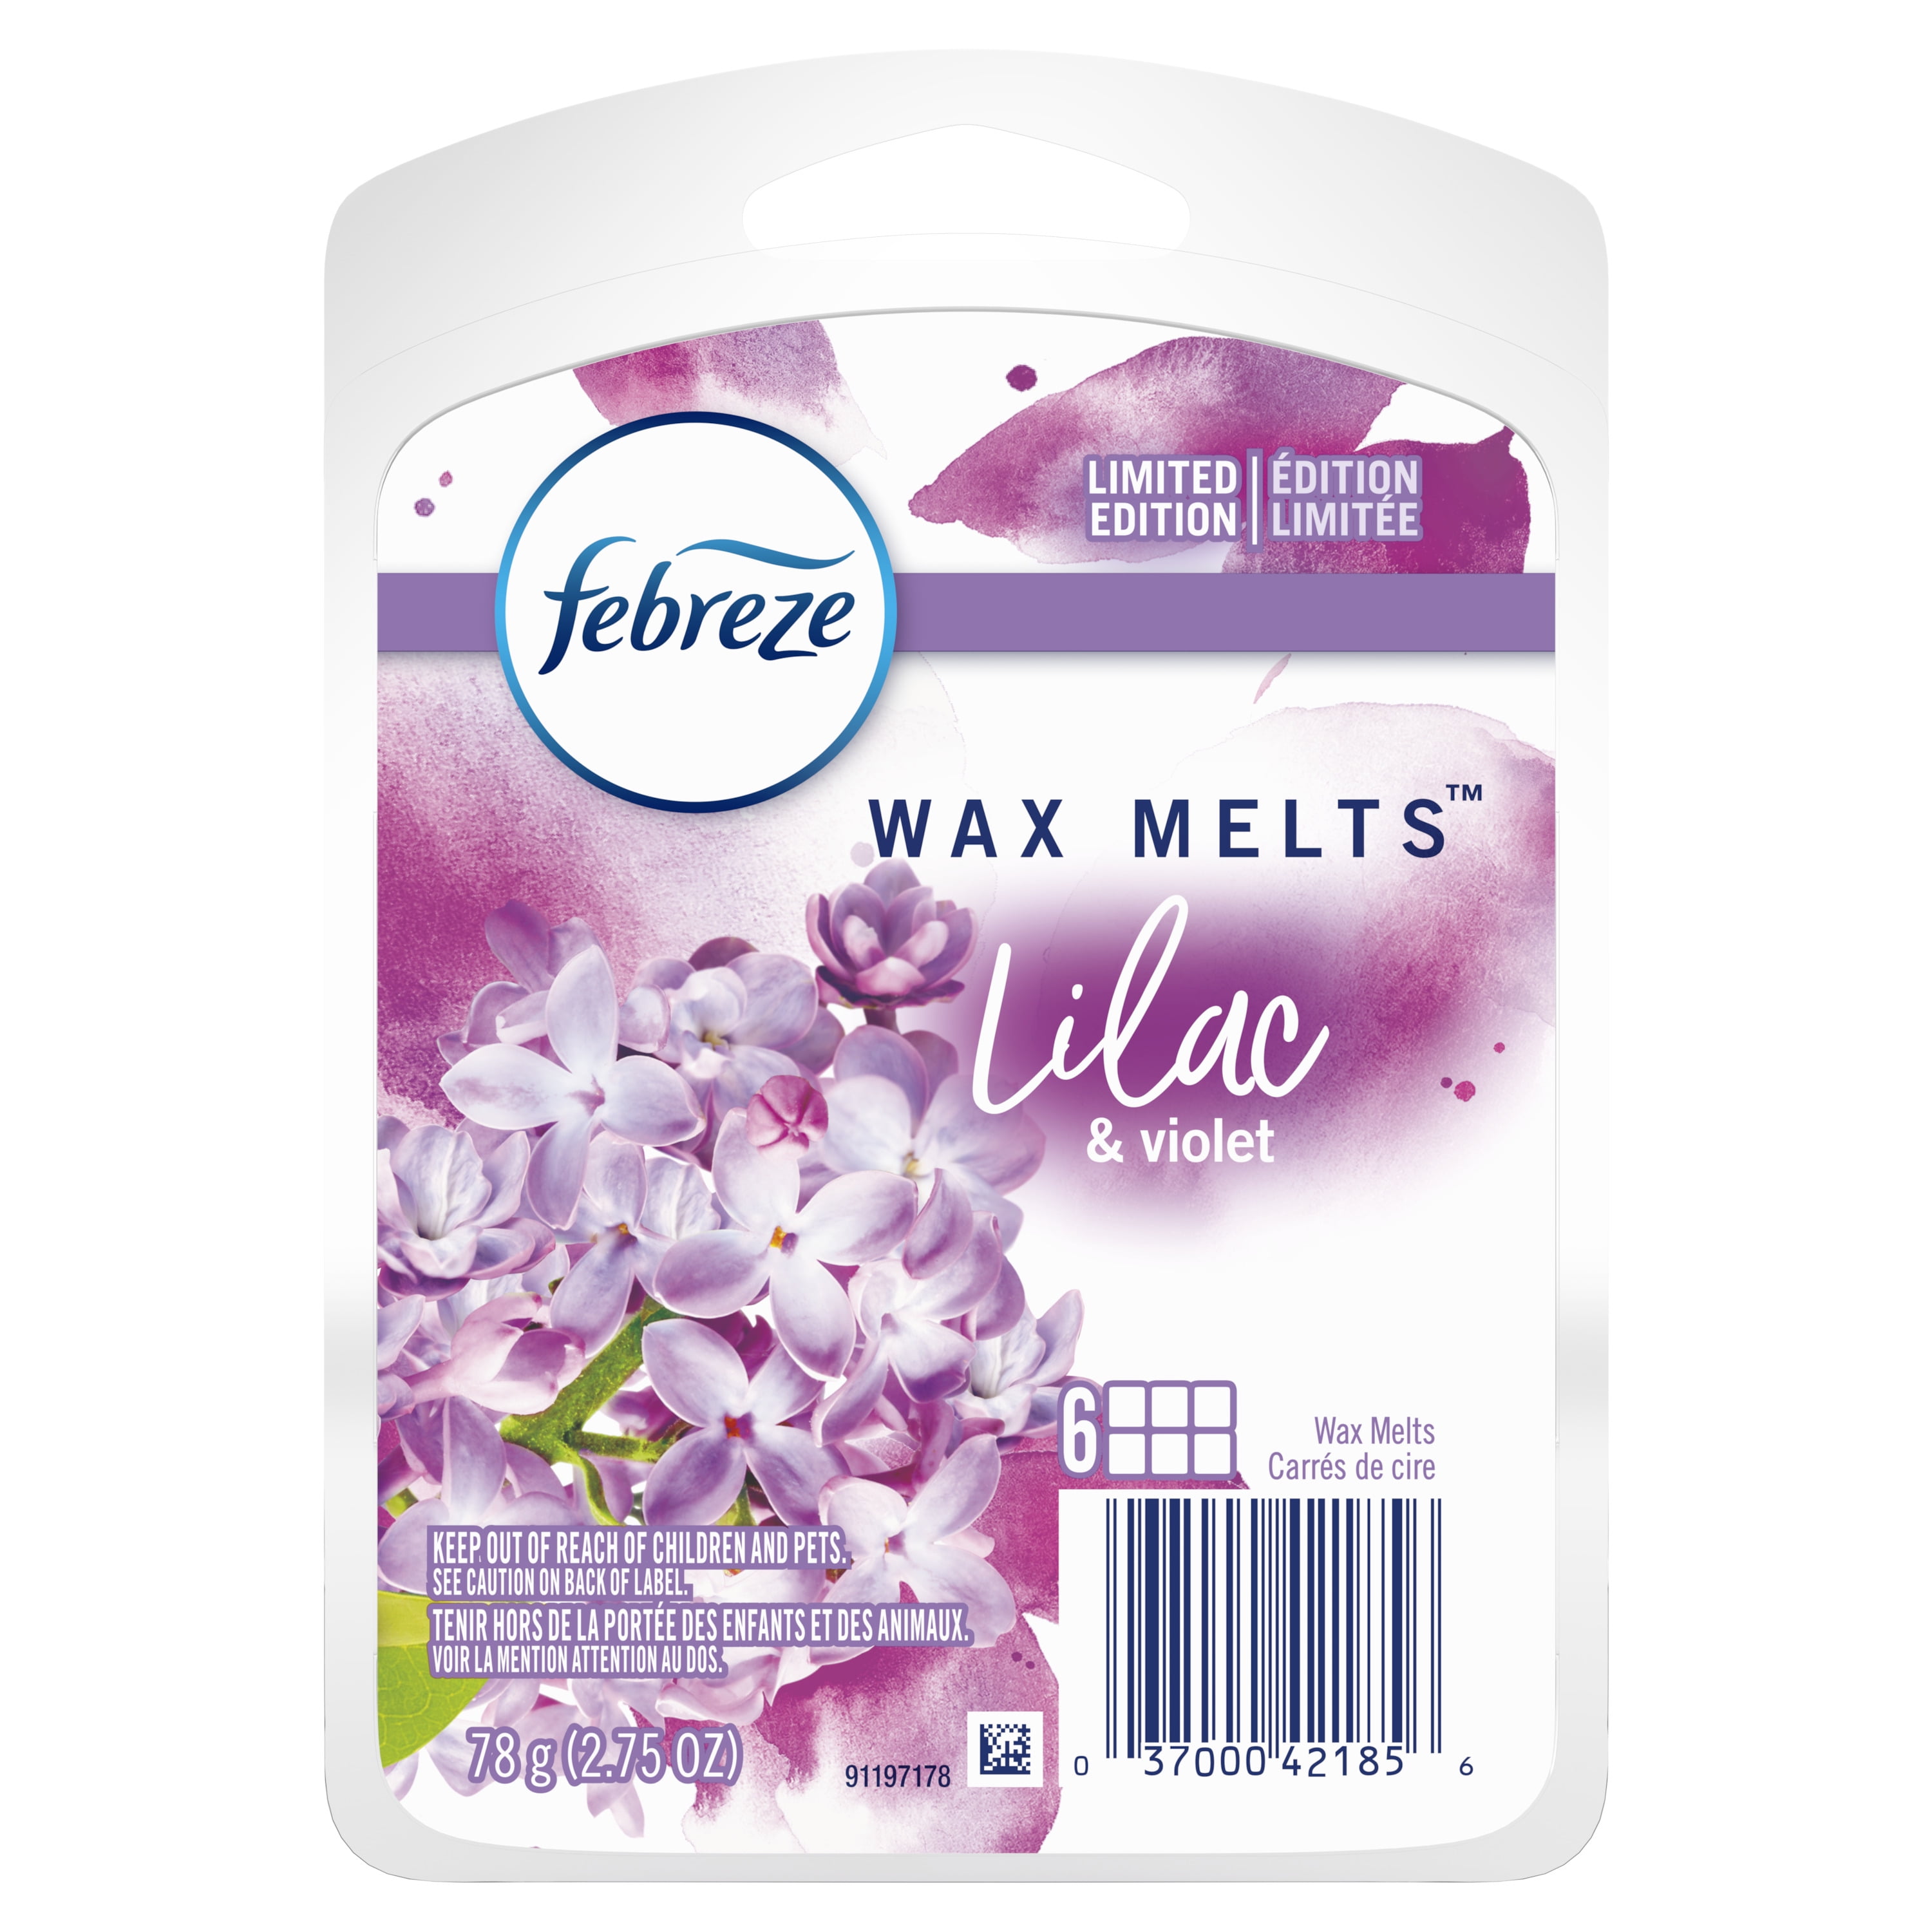 How to Use Febreze Wax Melts